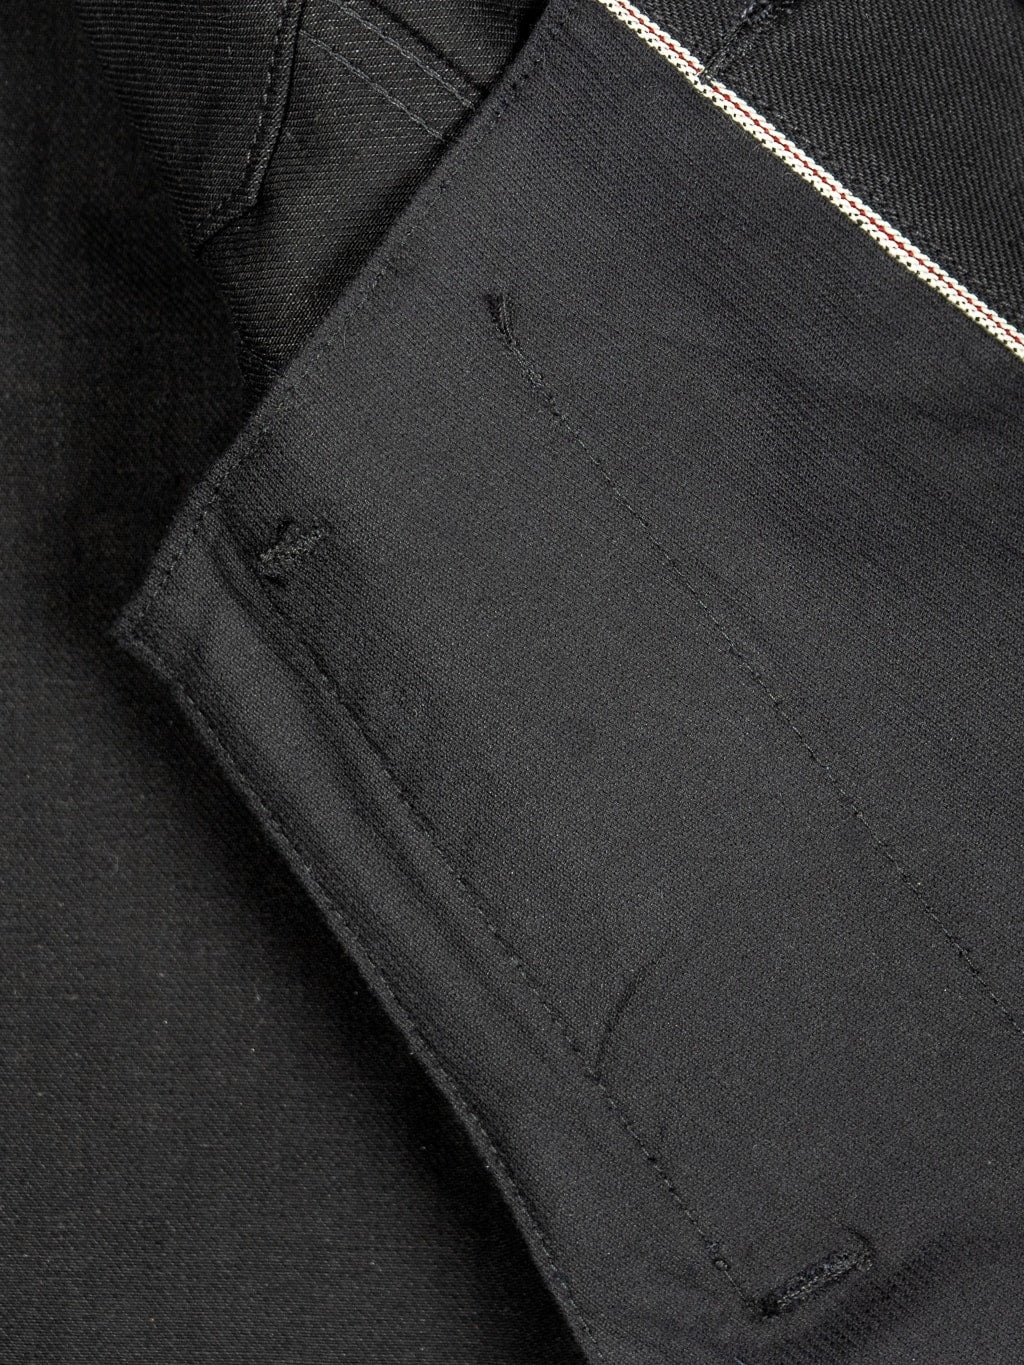 3sixteen type III denim jacket double black interior pocket detail